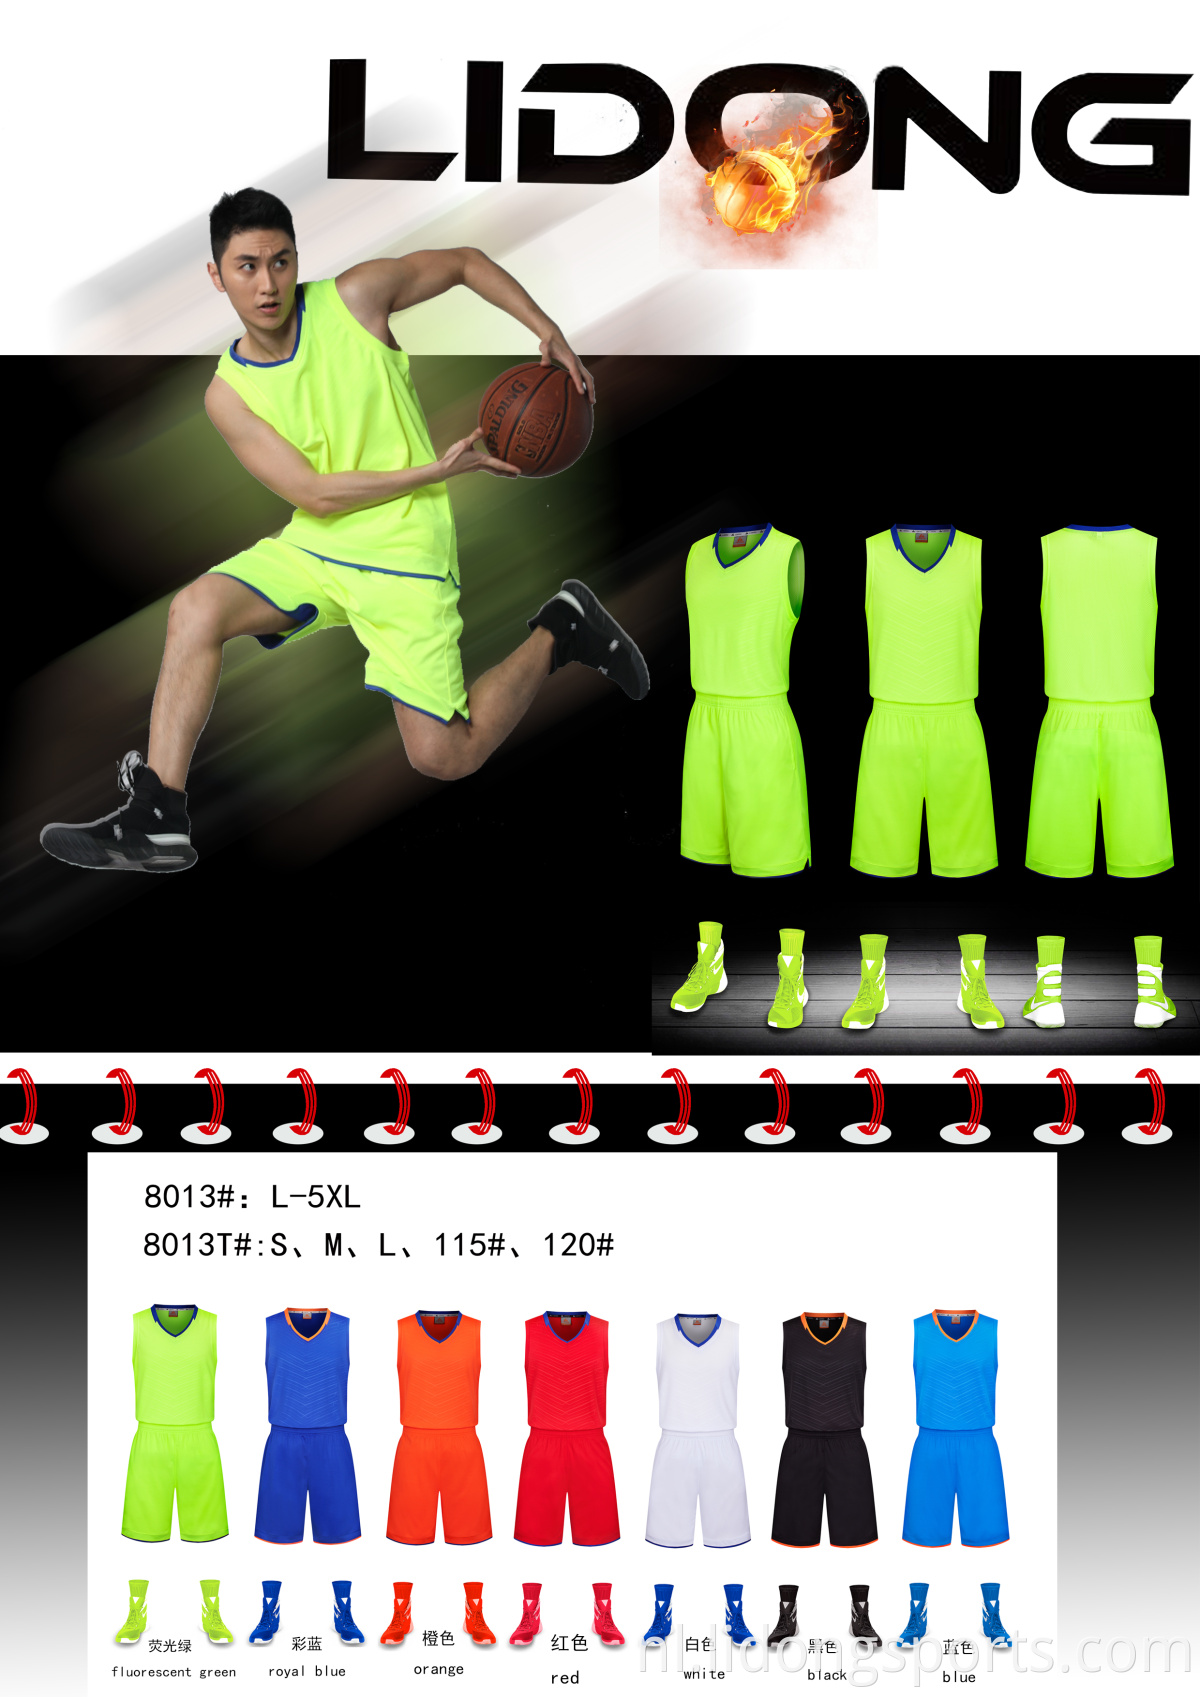 Blanco basketbal jerseys groothandel 2021 nieuwste basketball jersey ontwerp